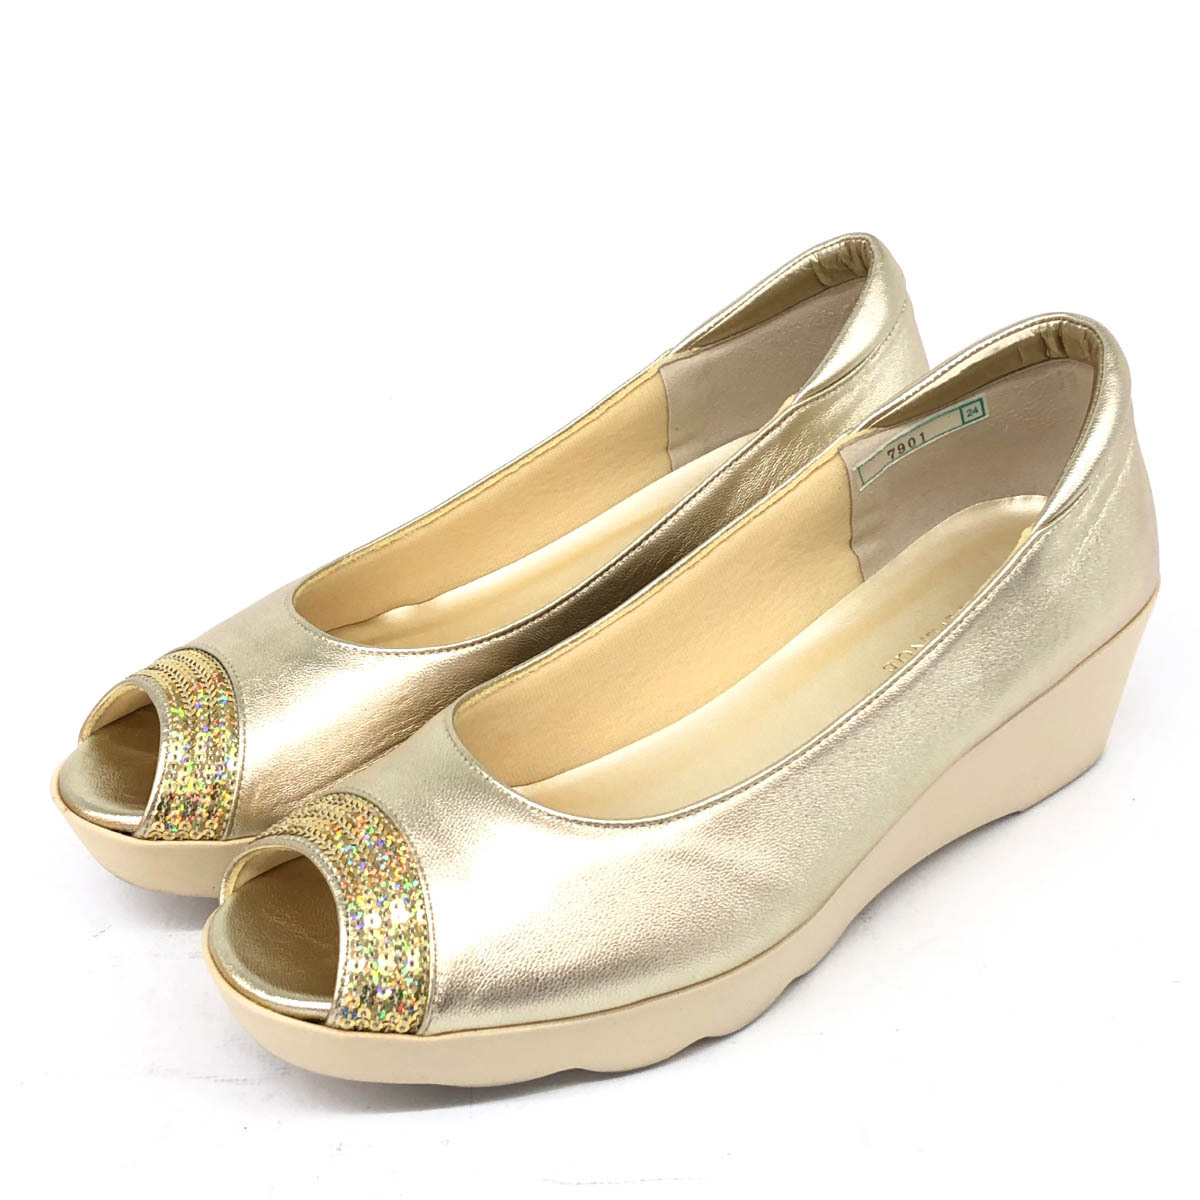  хороший *hills avenue Hill z avenue туфли-лодочки 24* Gold цвет украшен блестками женский обувь обувь shoesweji подошва 